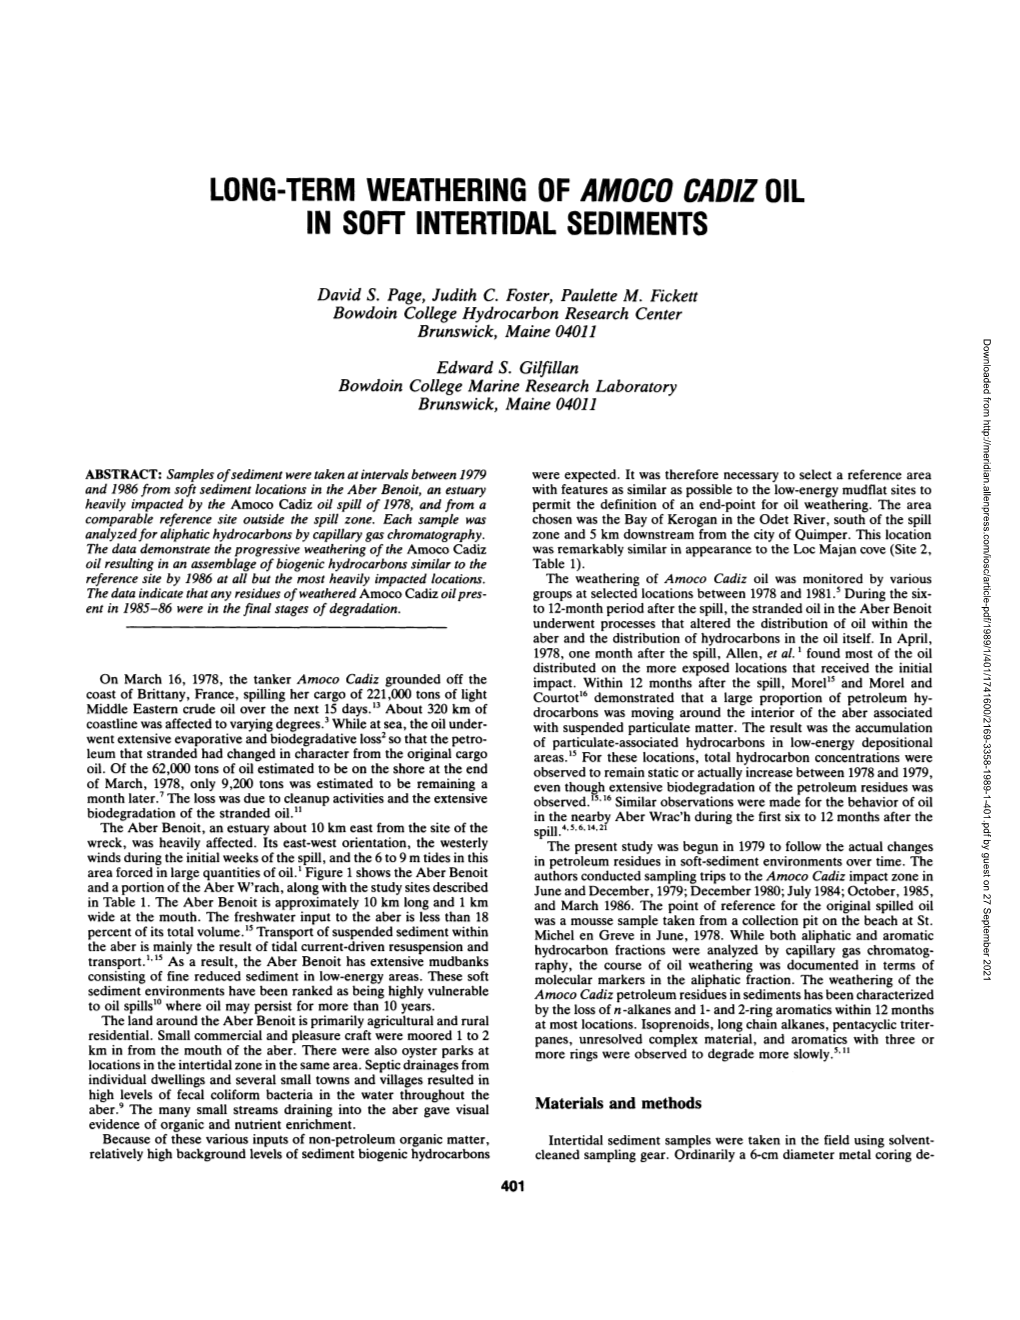 Long-Term Weathering of Amoco Cadiz Oil in Soft Intertidal Sediments